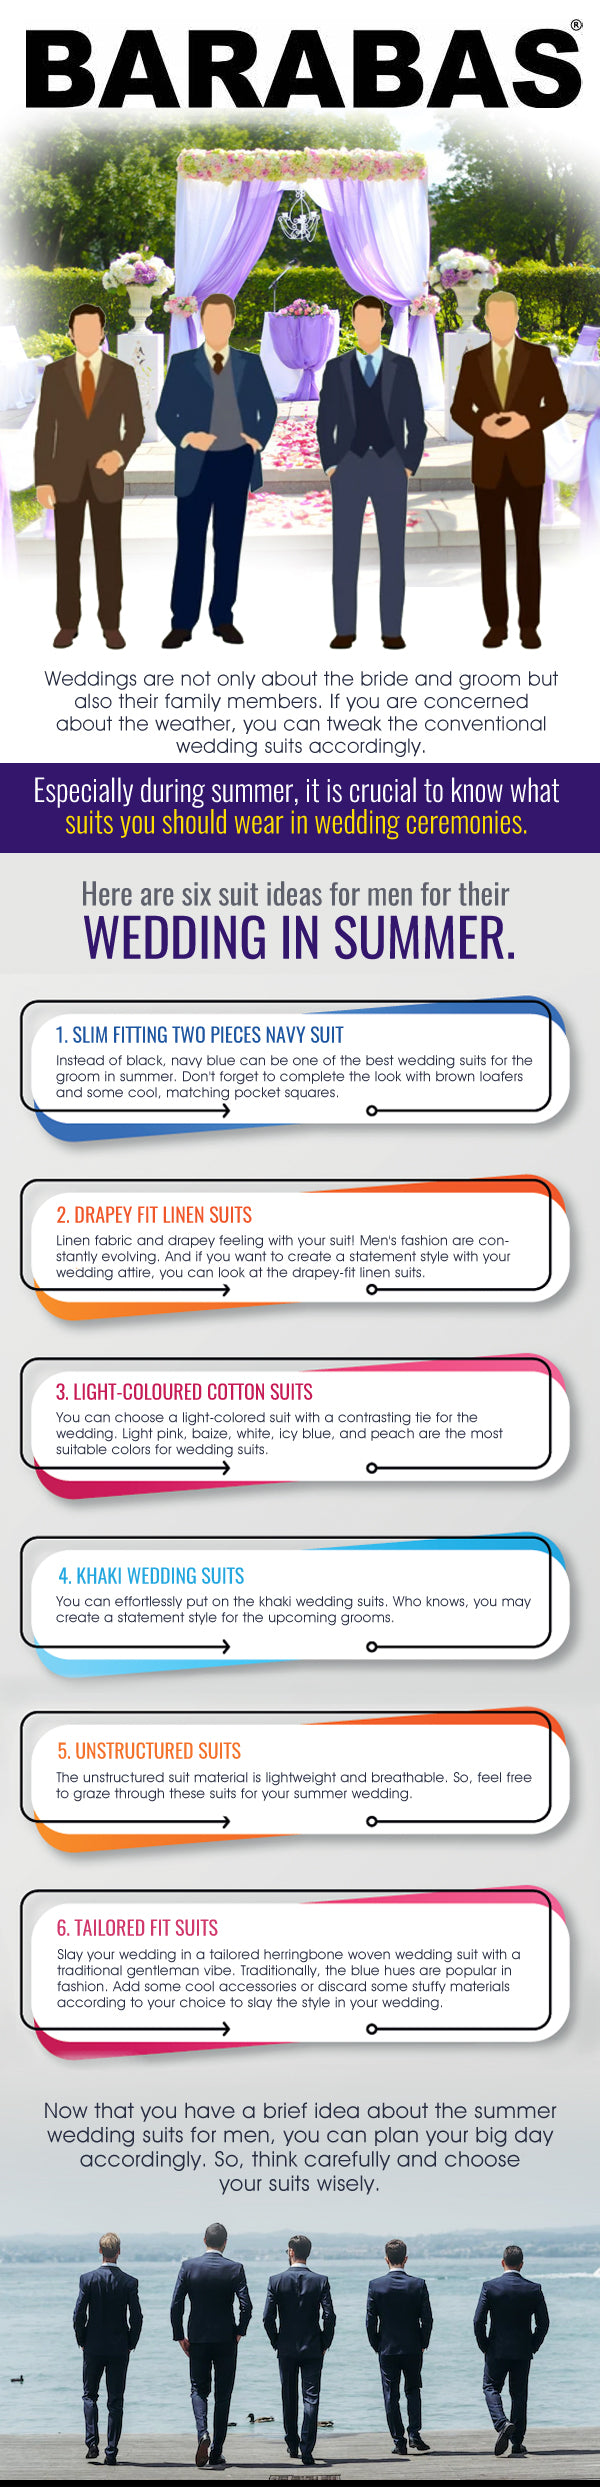 6 Best Summer Wedding Suits for Men - Barabas Men